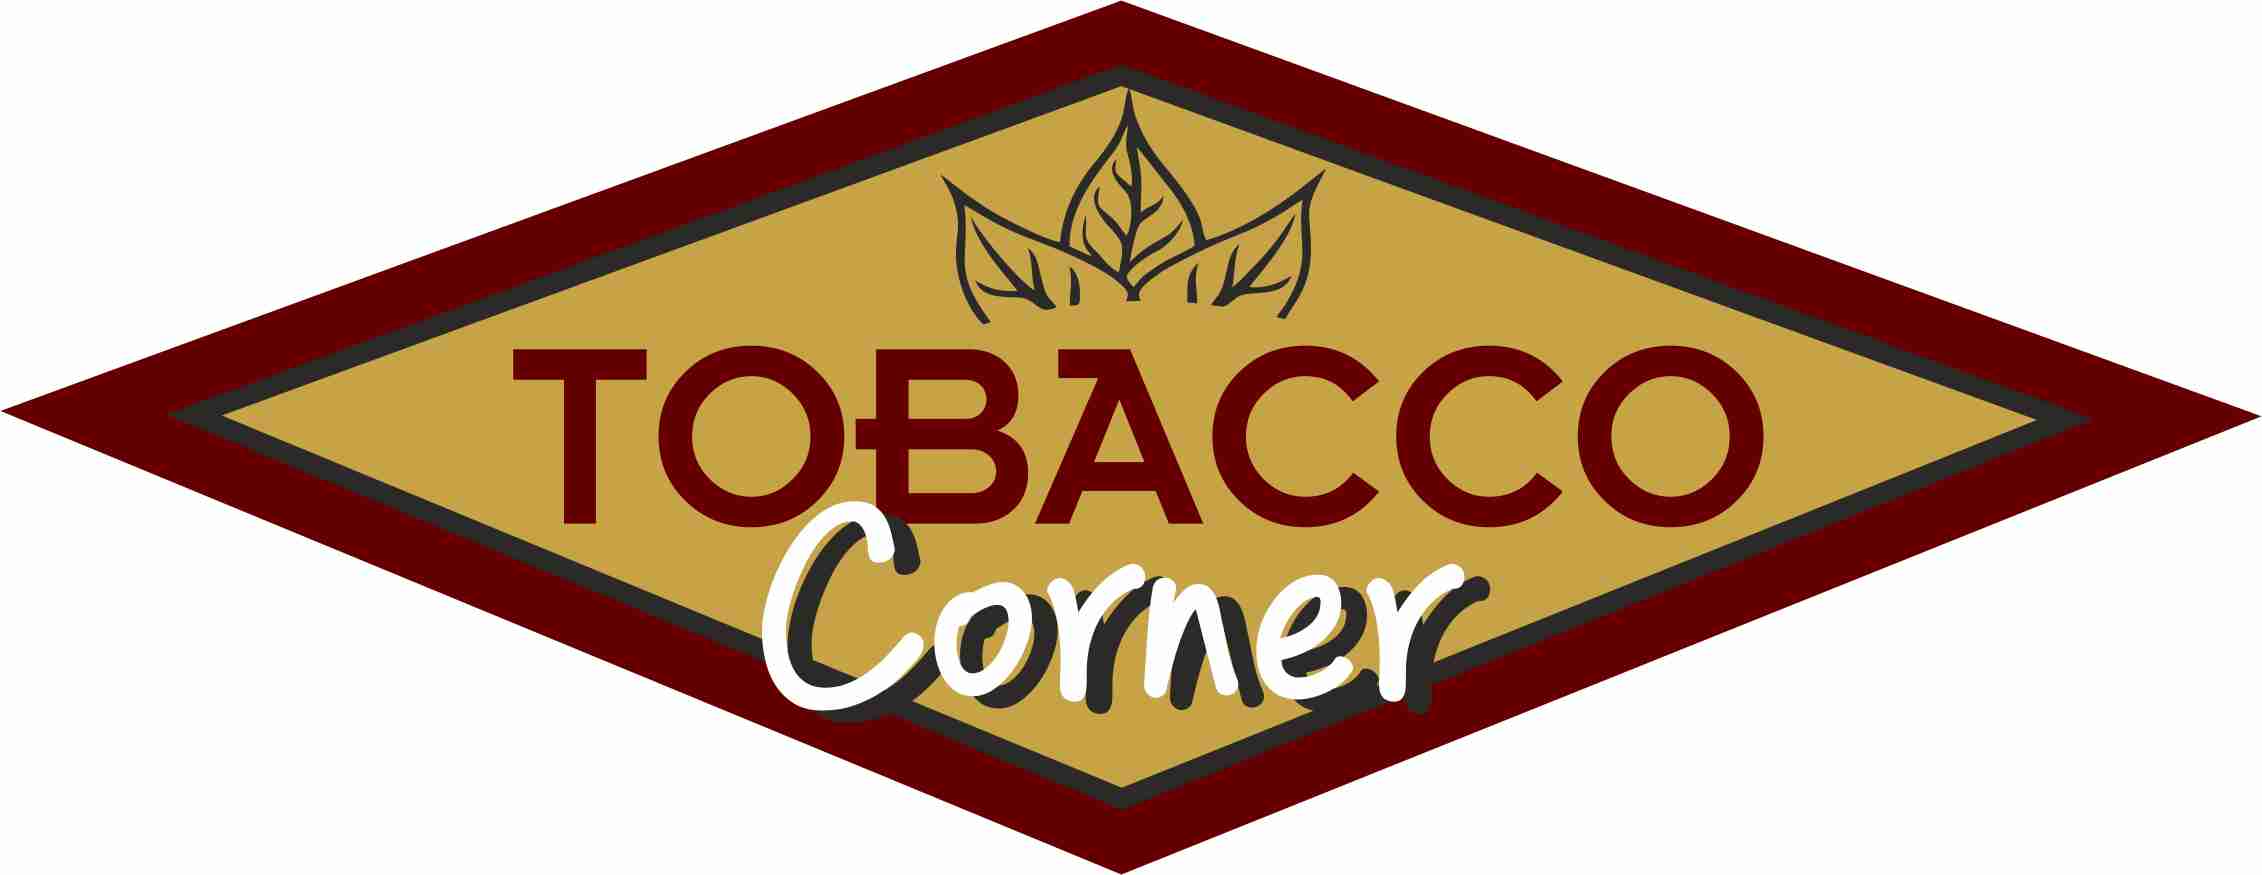 tobaccoCORNER logo.jpg